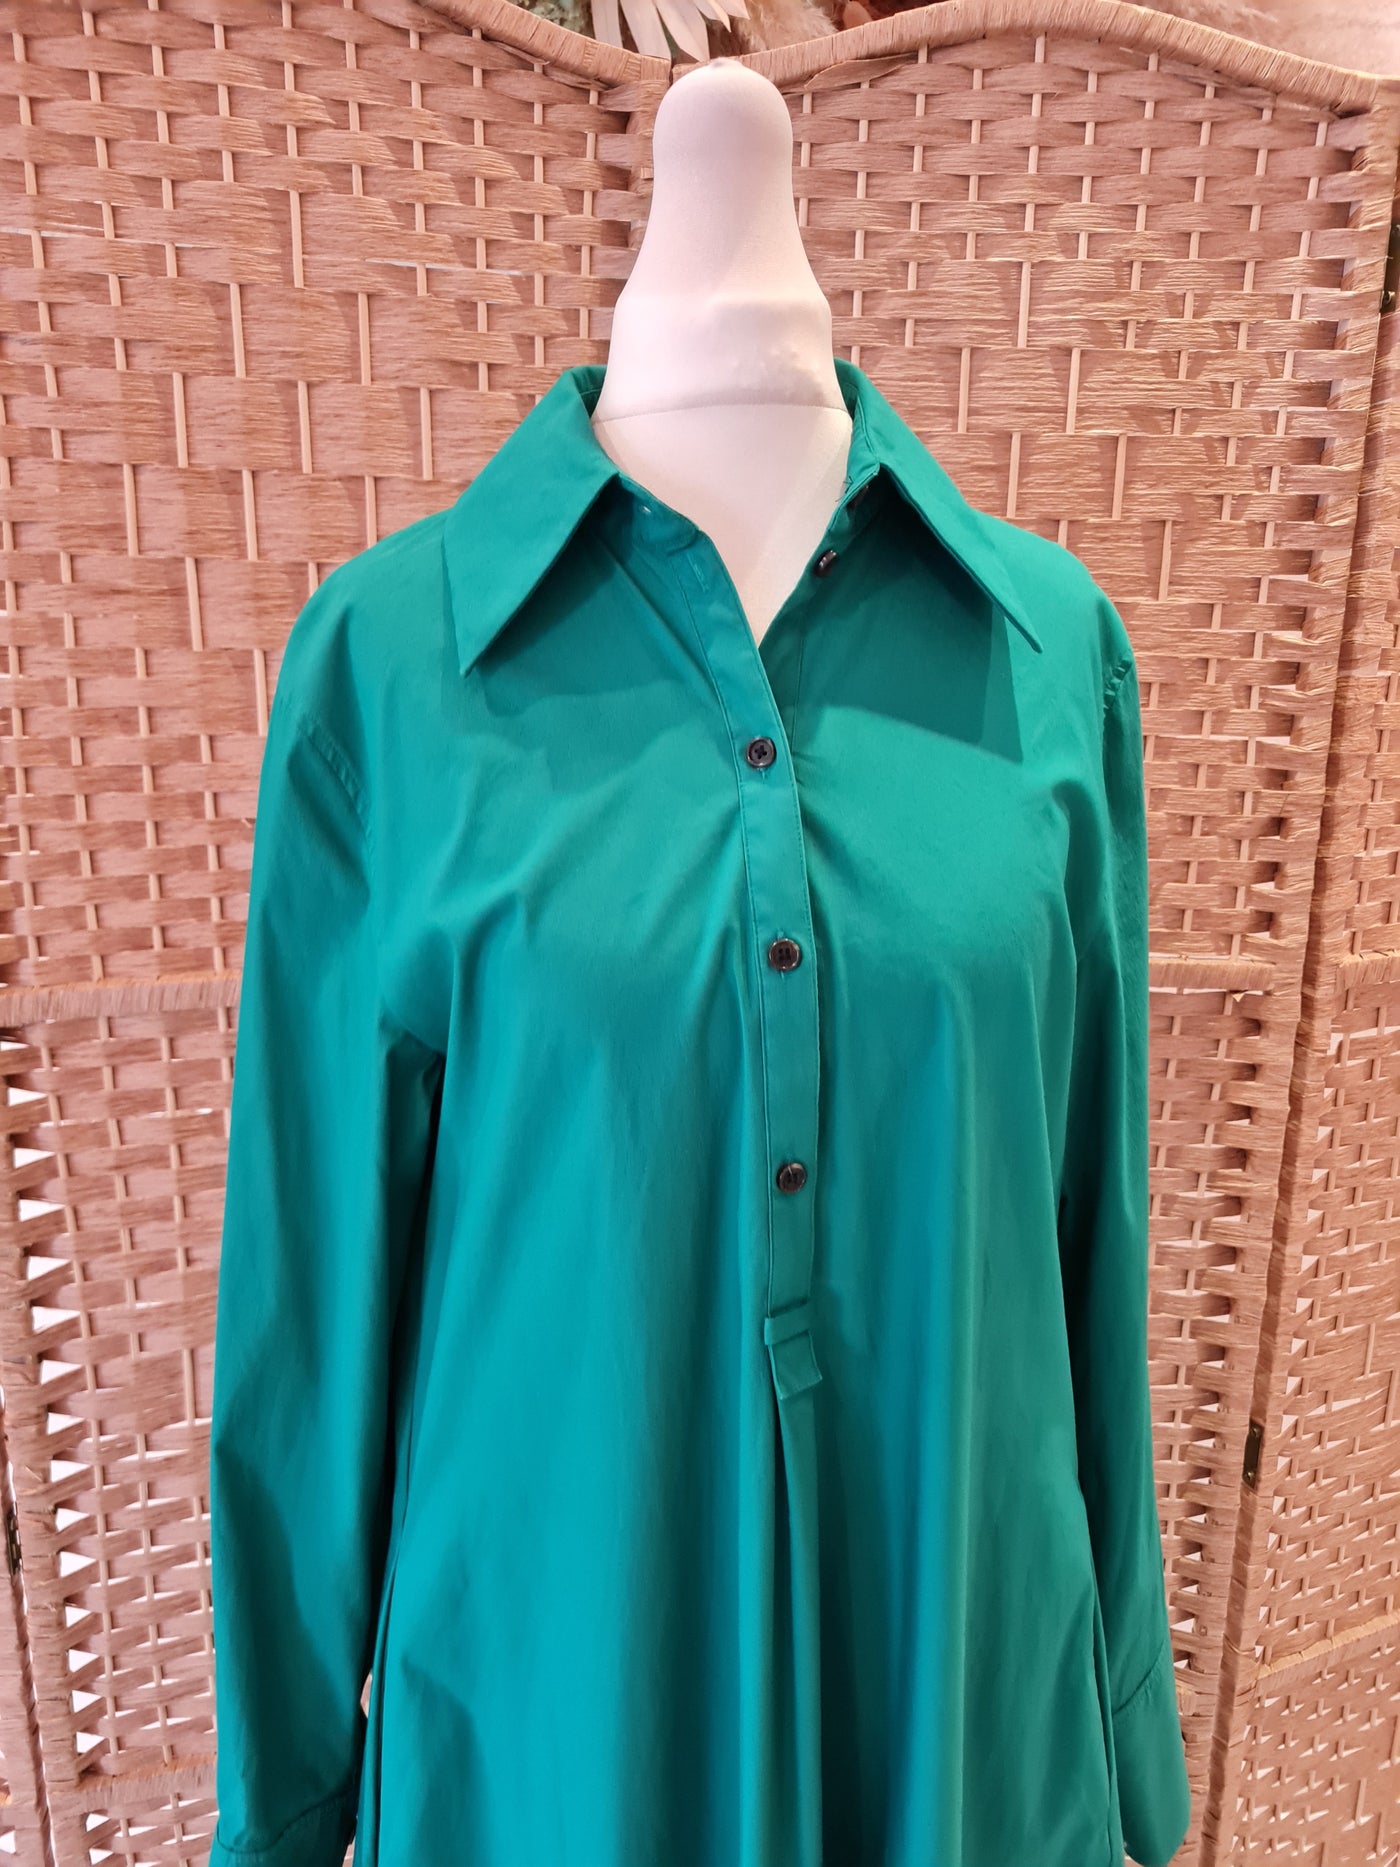 Cos Green Long Sleeve Dress Small